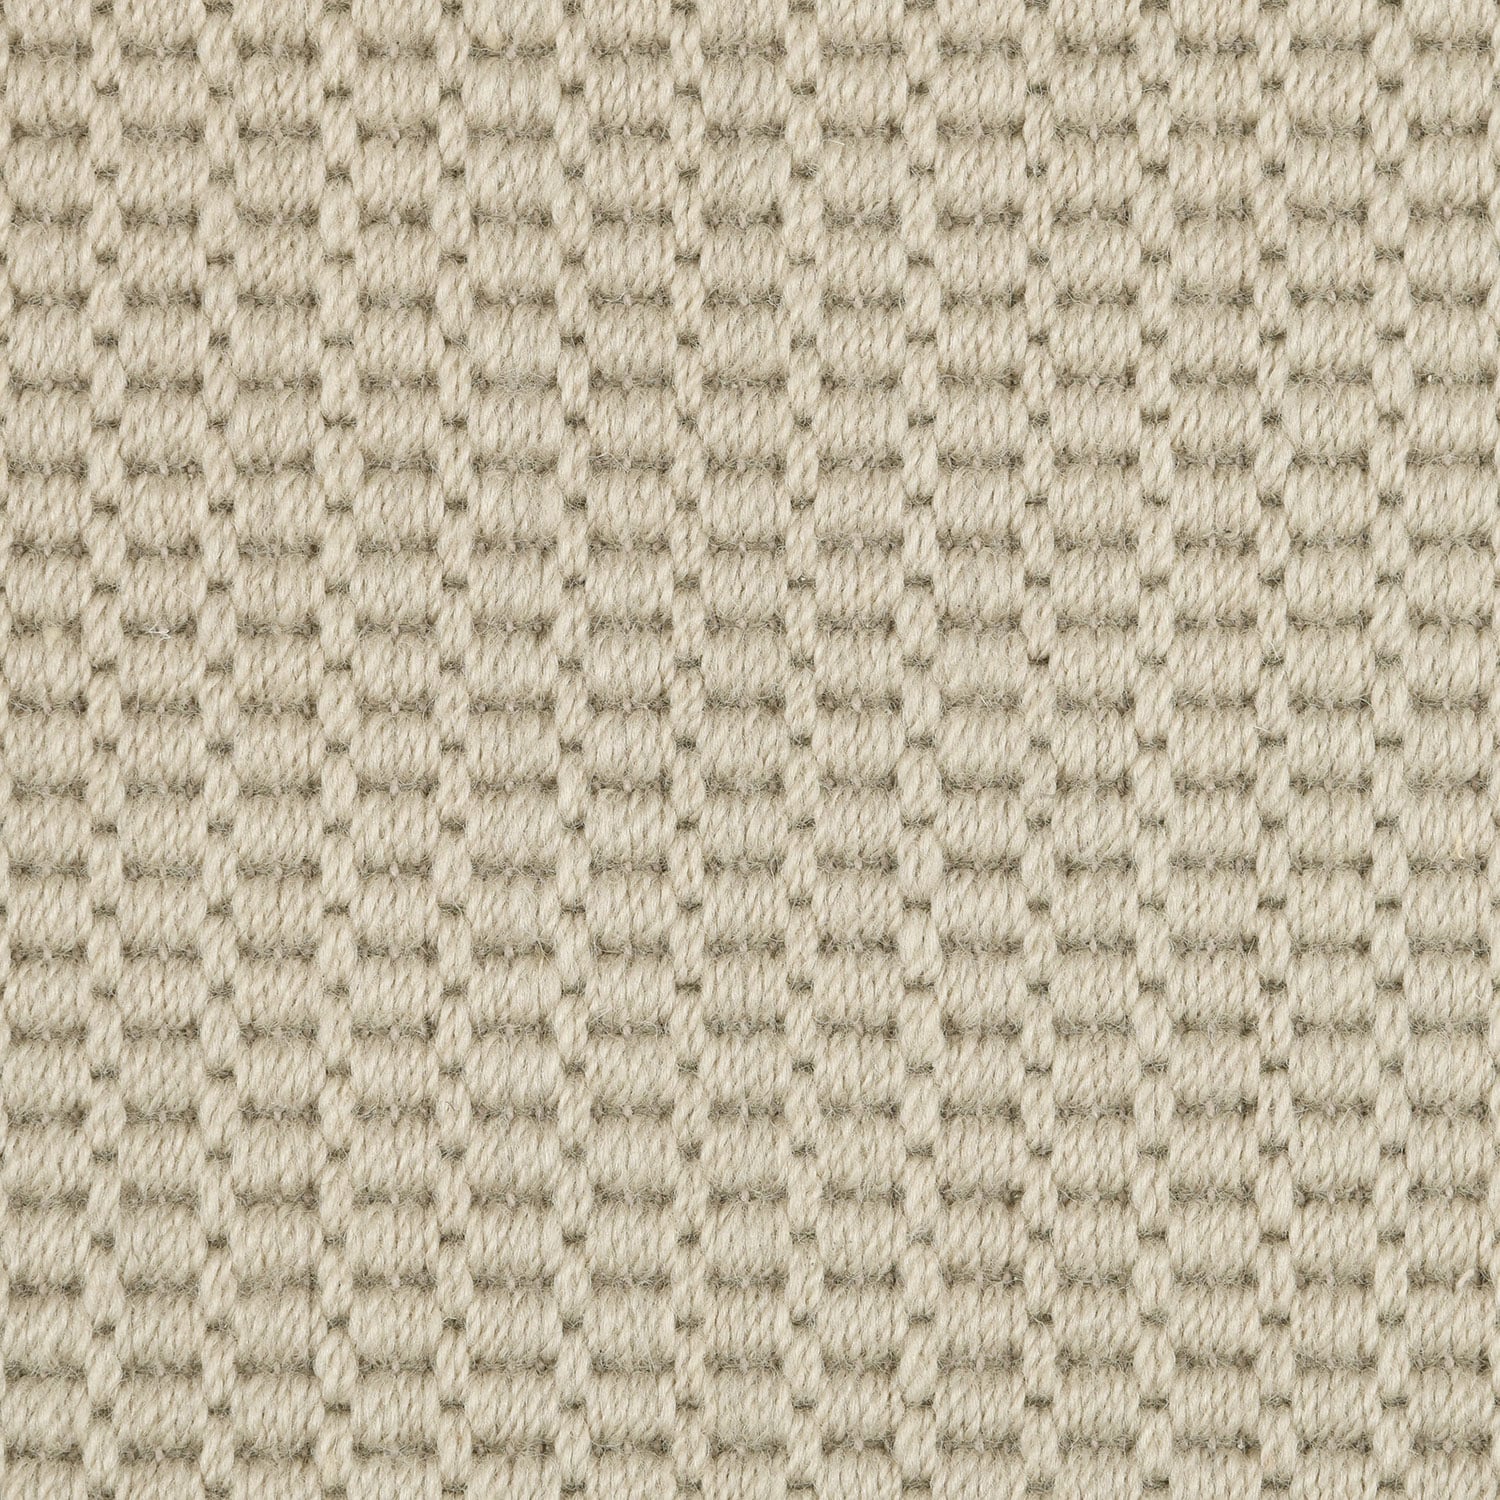 Lace: Muslin - 100% New Zealand Wool Carpet